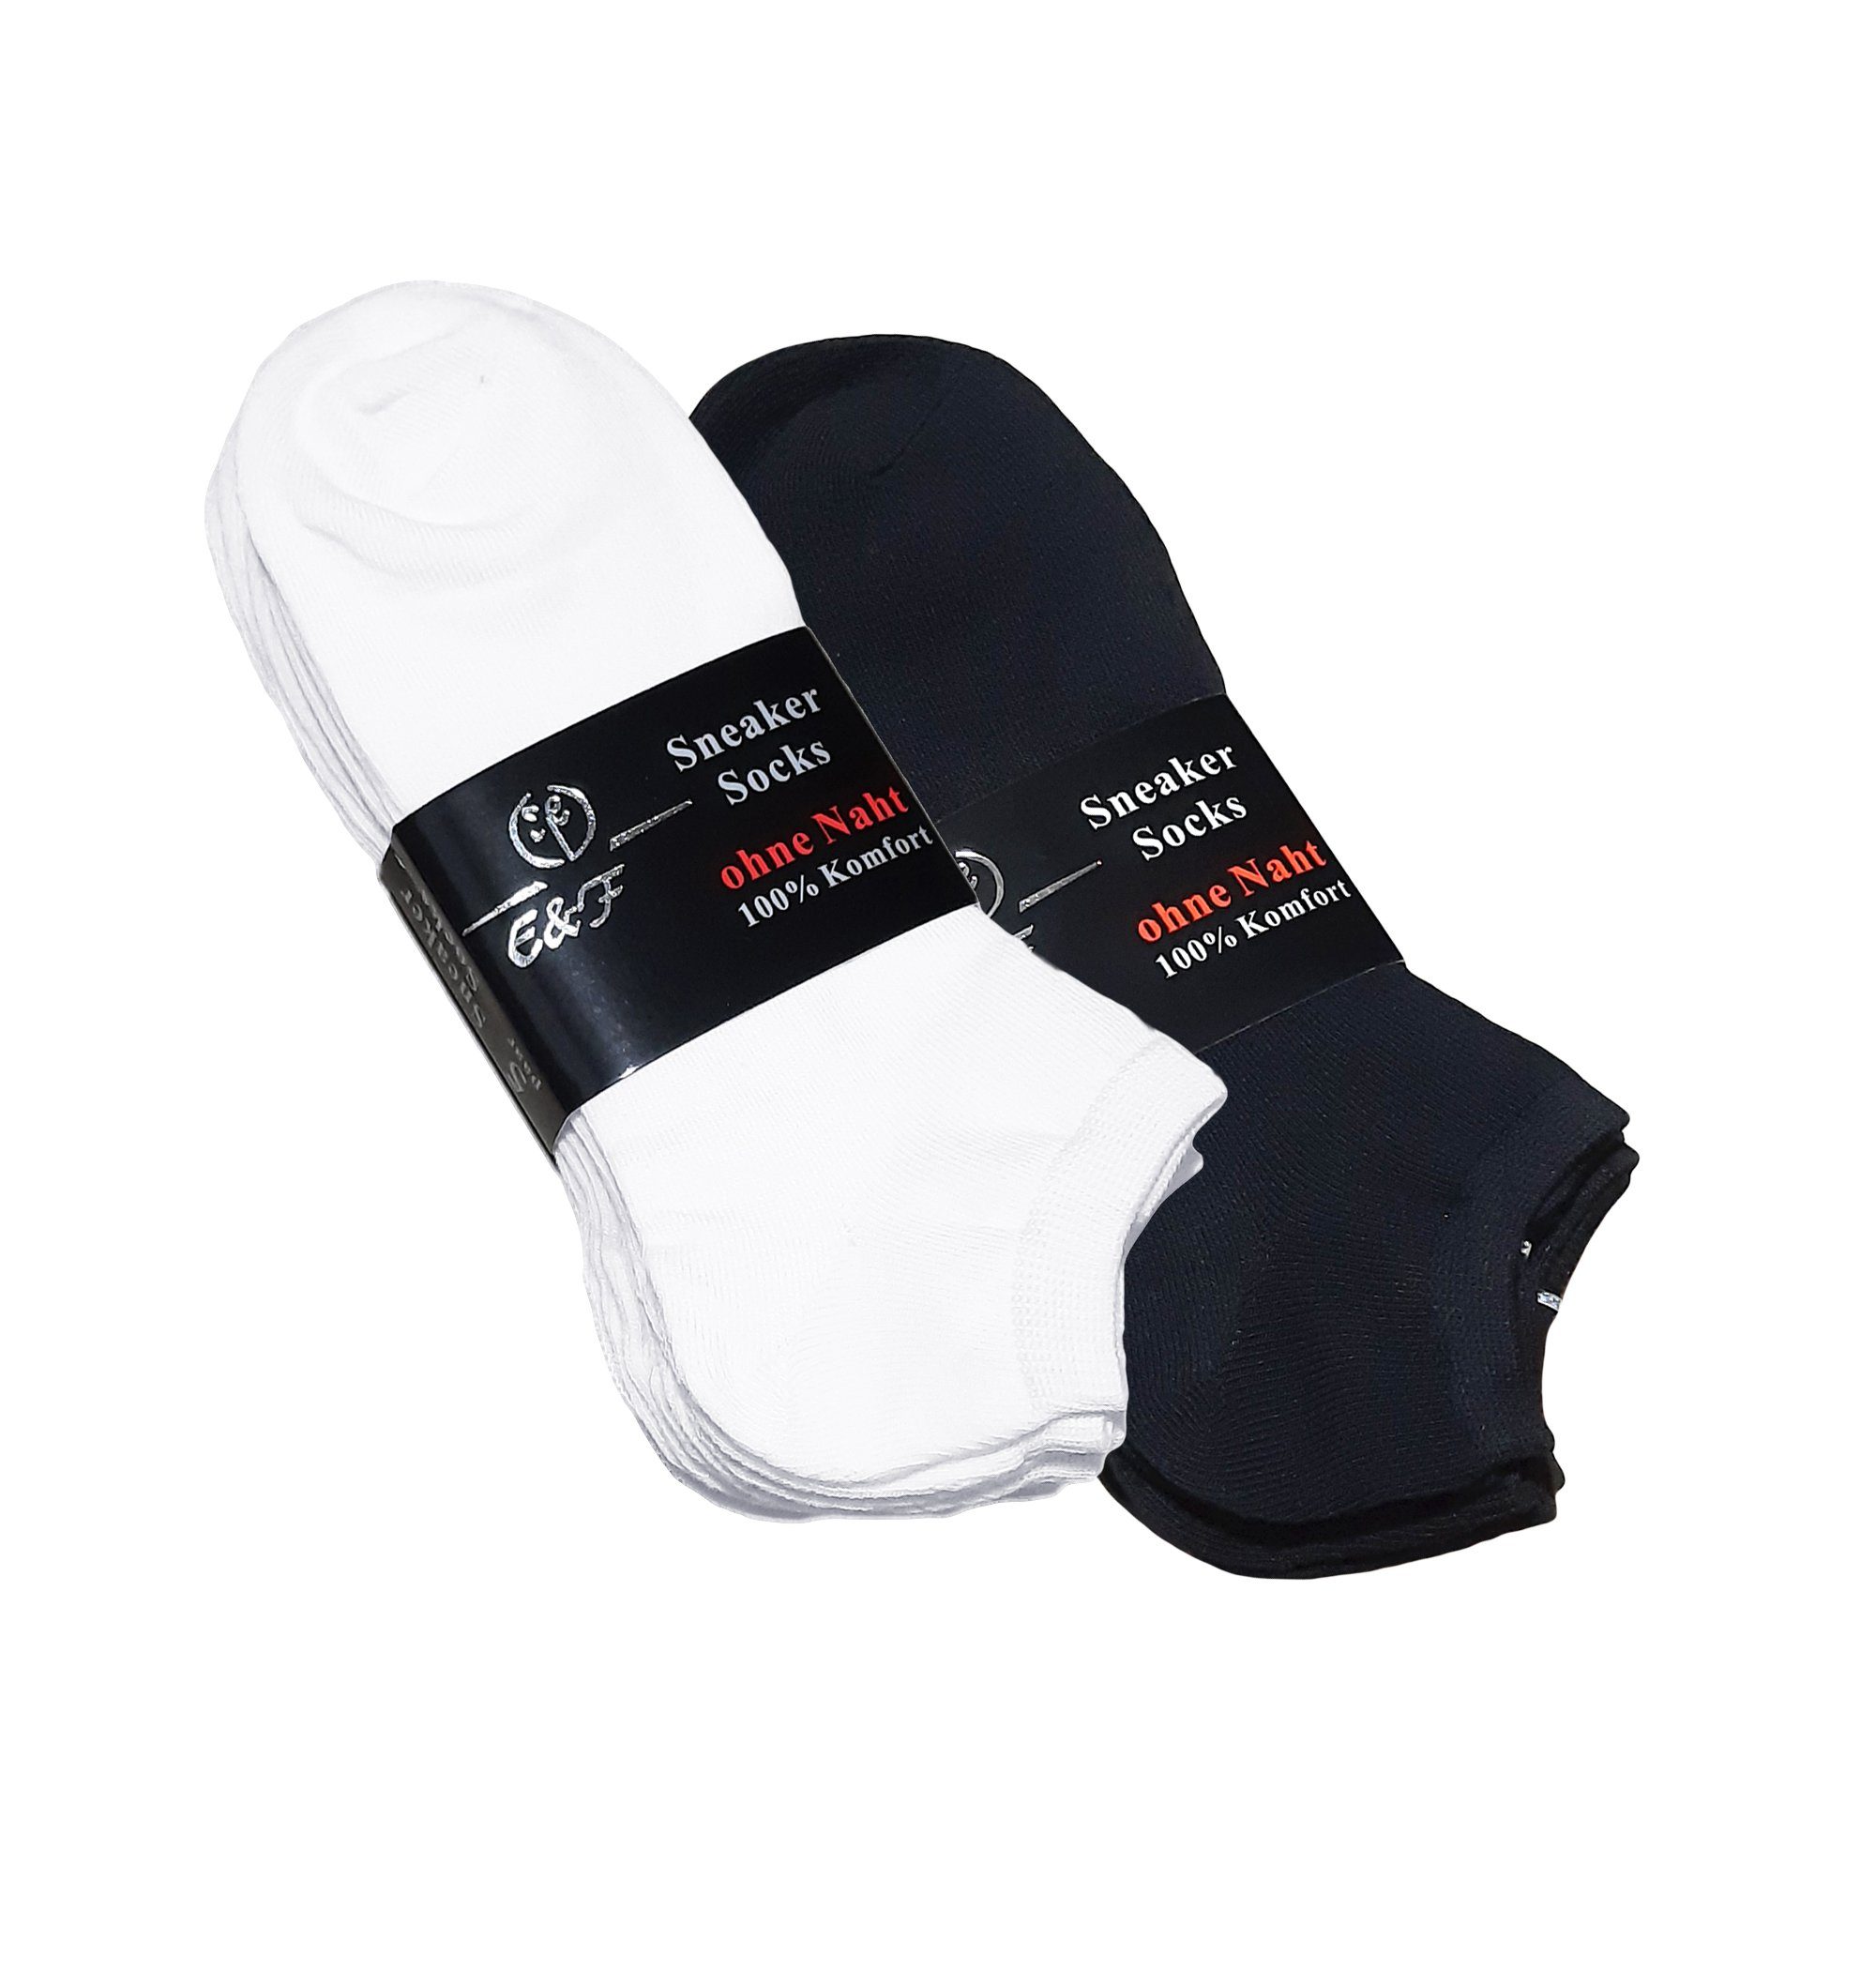 flach) (sehr Farben Sockenhimmel kurze Sportsocken Sommersocken (10 Sneakersocken leichte Basic Naht Damen Socken Mix Paar) in maschinengekettelte (Schwarz/Weiß) für